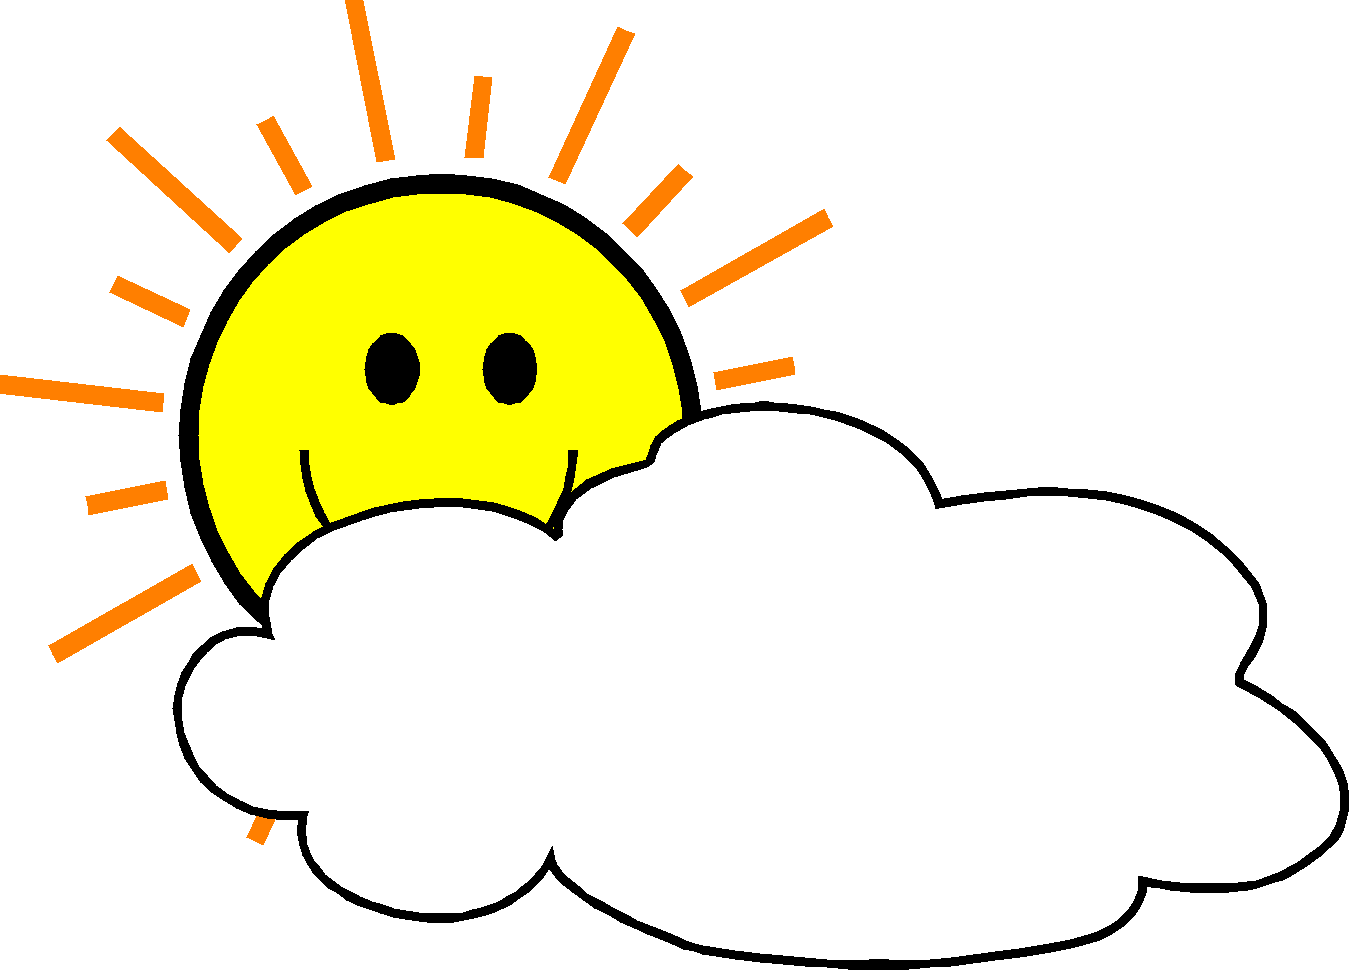 The sun is the cloud. Солнышко за Тучкой. Солнышко и туча. Солнце рисунок. Солнце и облака для детей.